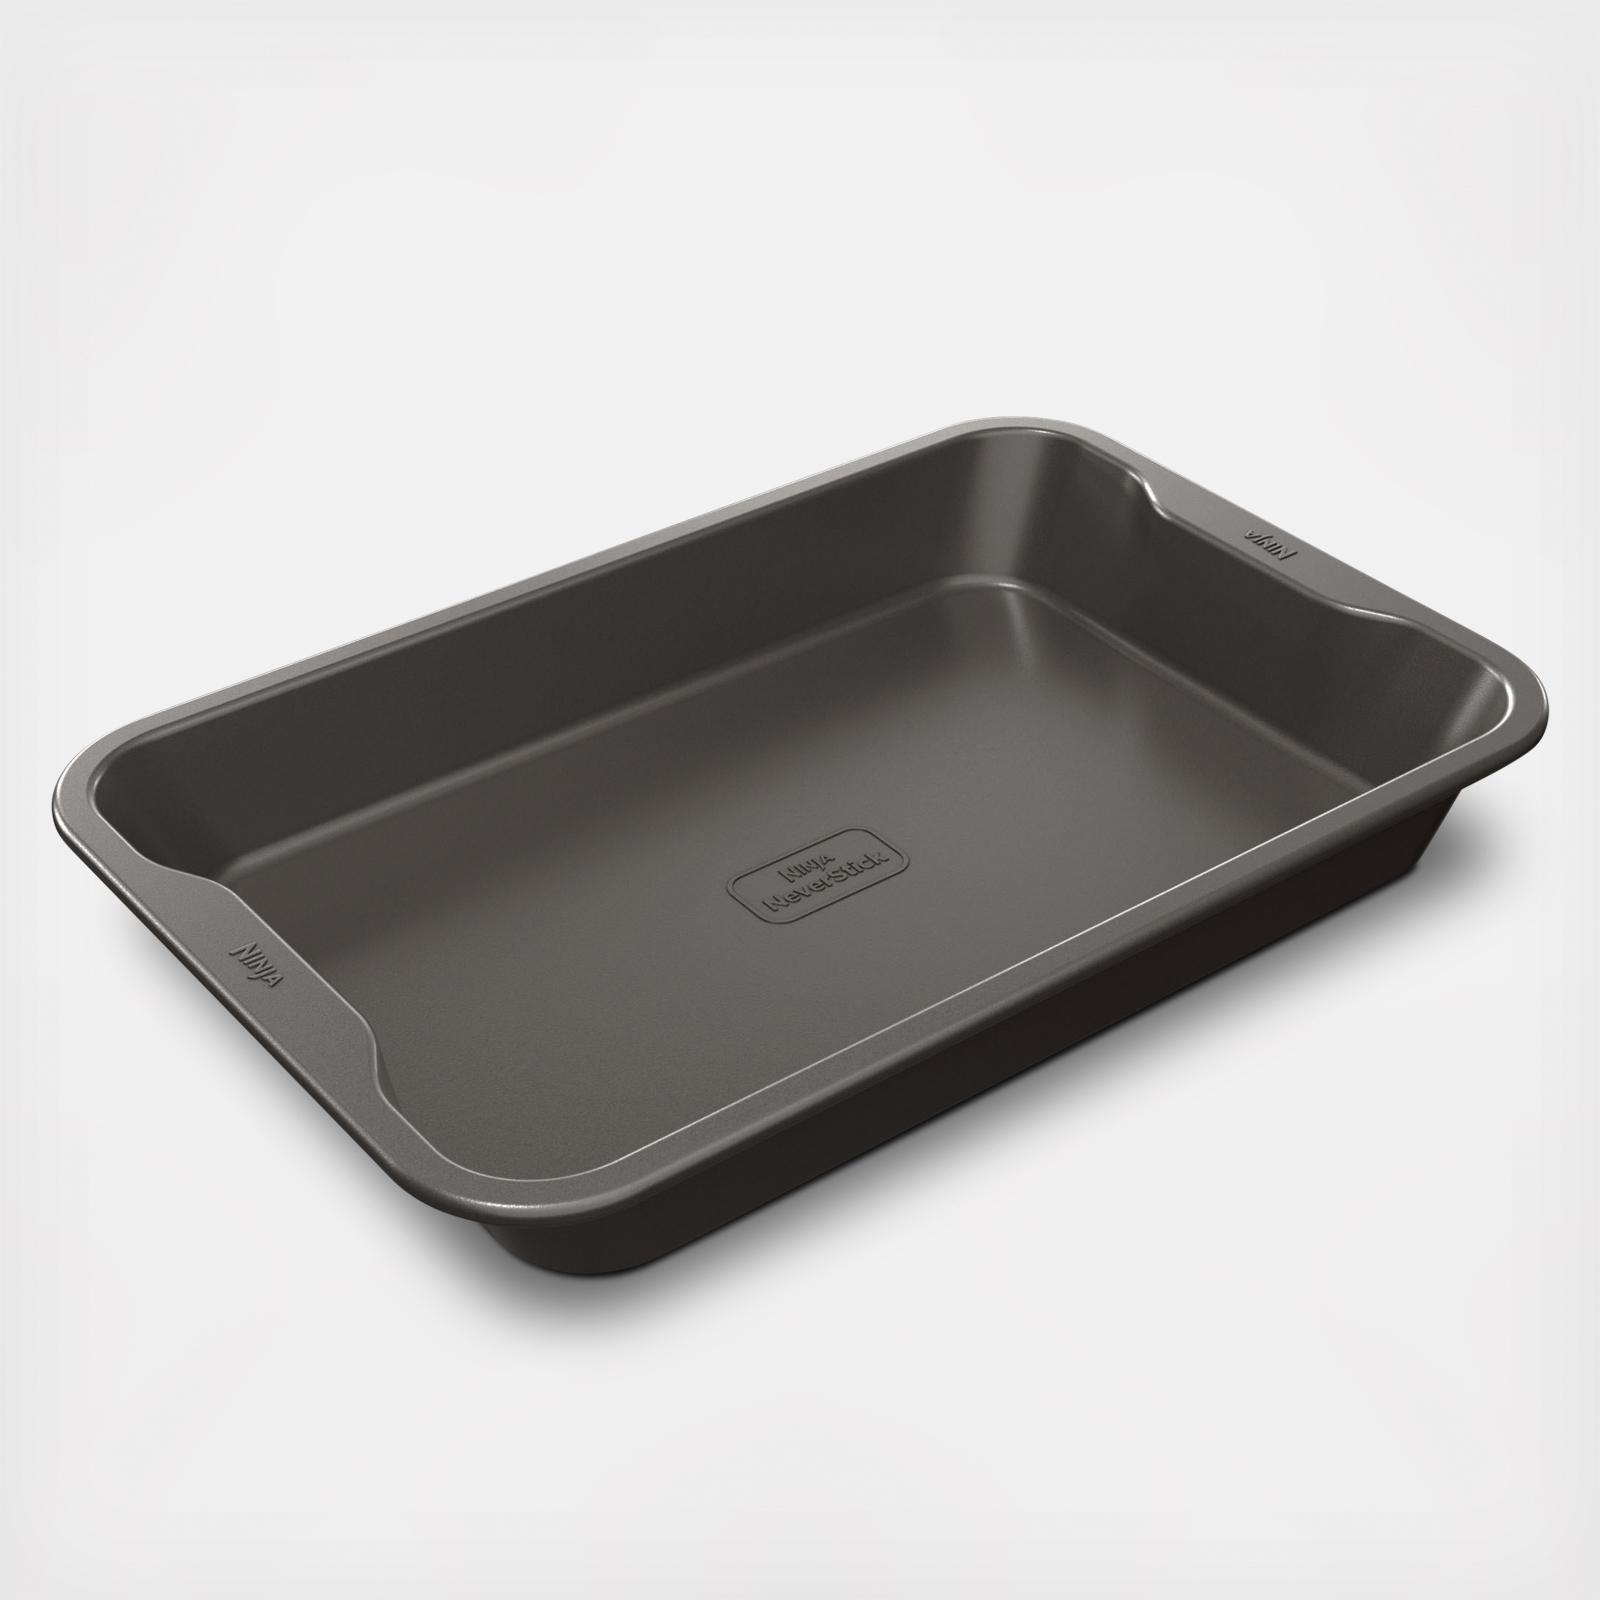 Non-stick Frying Pan, 3 Inches Deep, 9x13 Baking Pan, Rectangular Cake Pan,  Oven Safe, Dishwasher Safe, With Stainless Steel Handle, Dark Grey